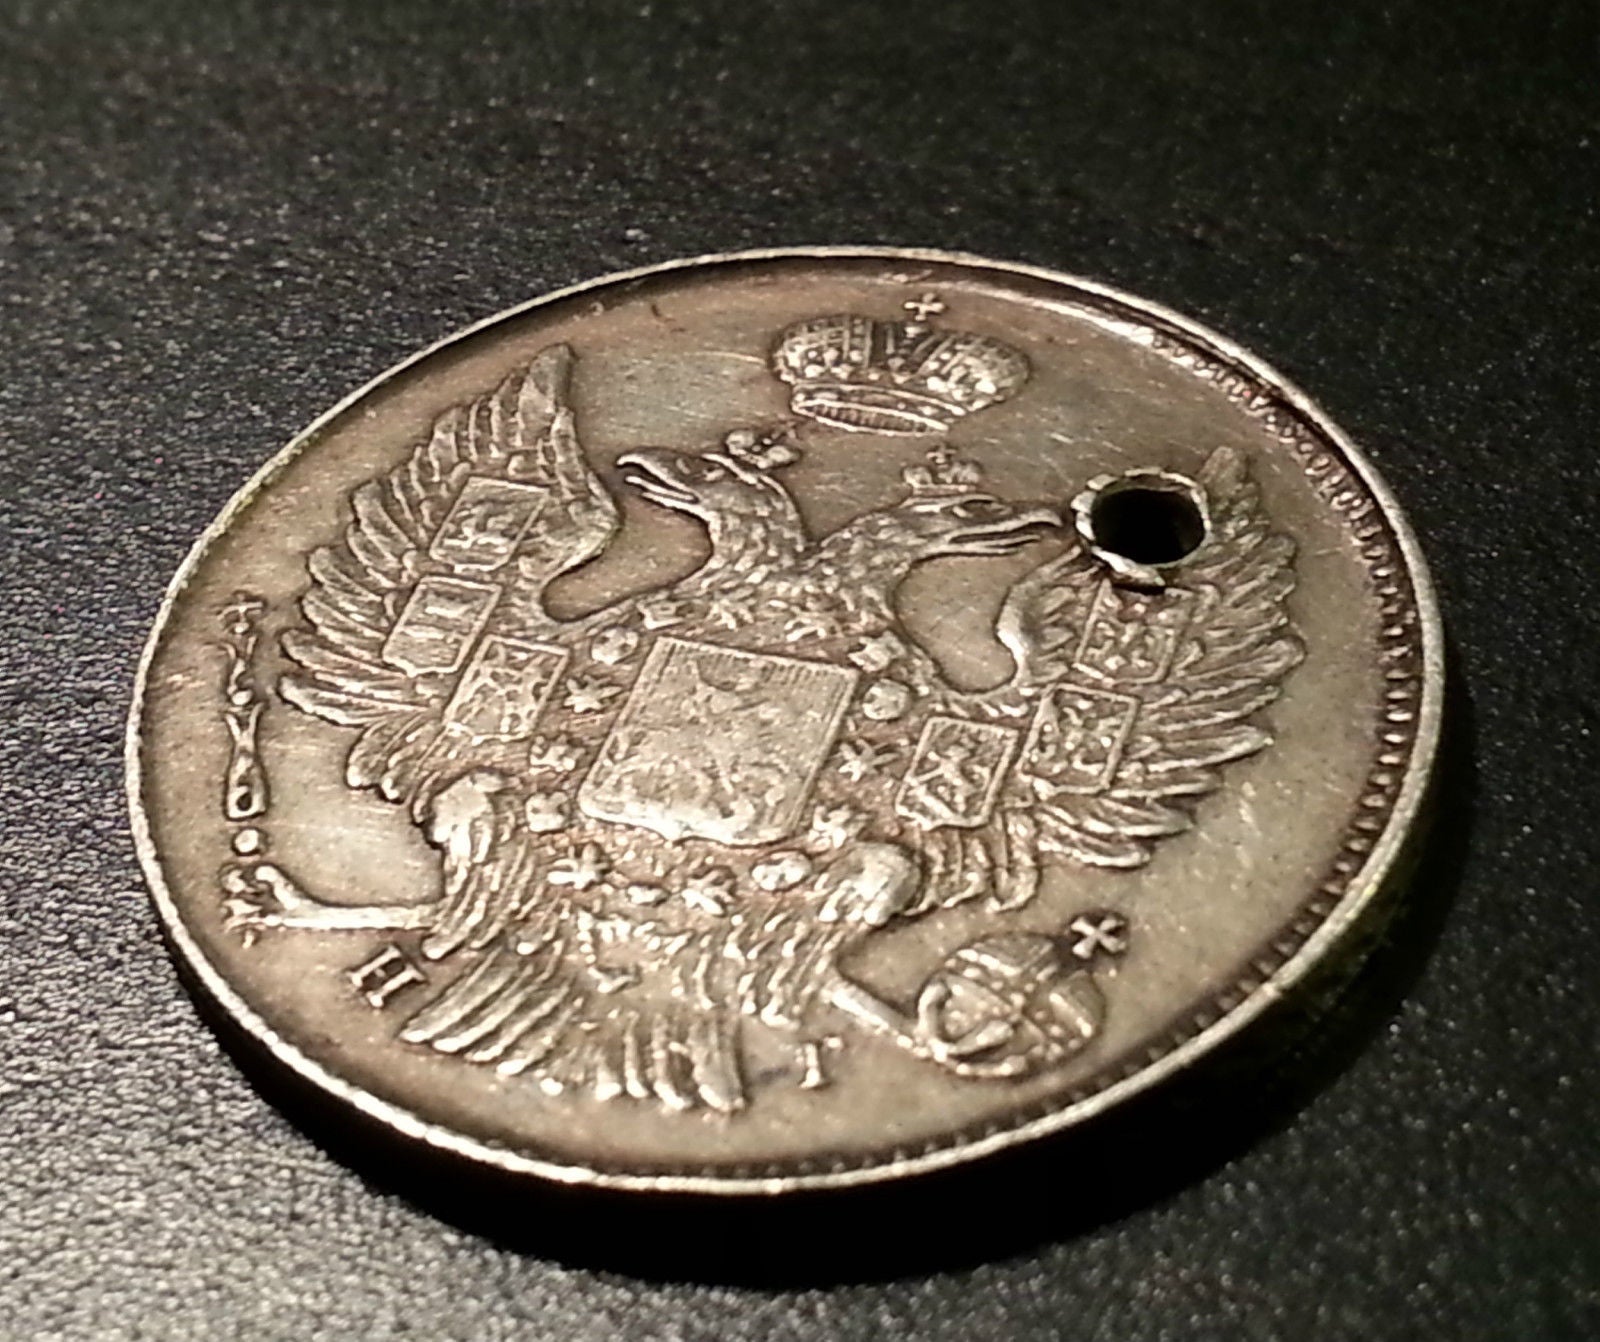 Antique 1840 silver coin 20 kopeks Emperor Nicholas I of Russian Empire 19thC